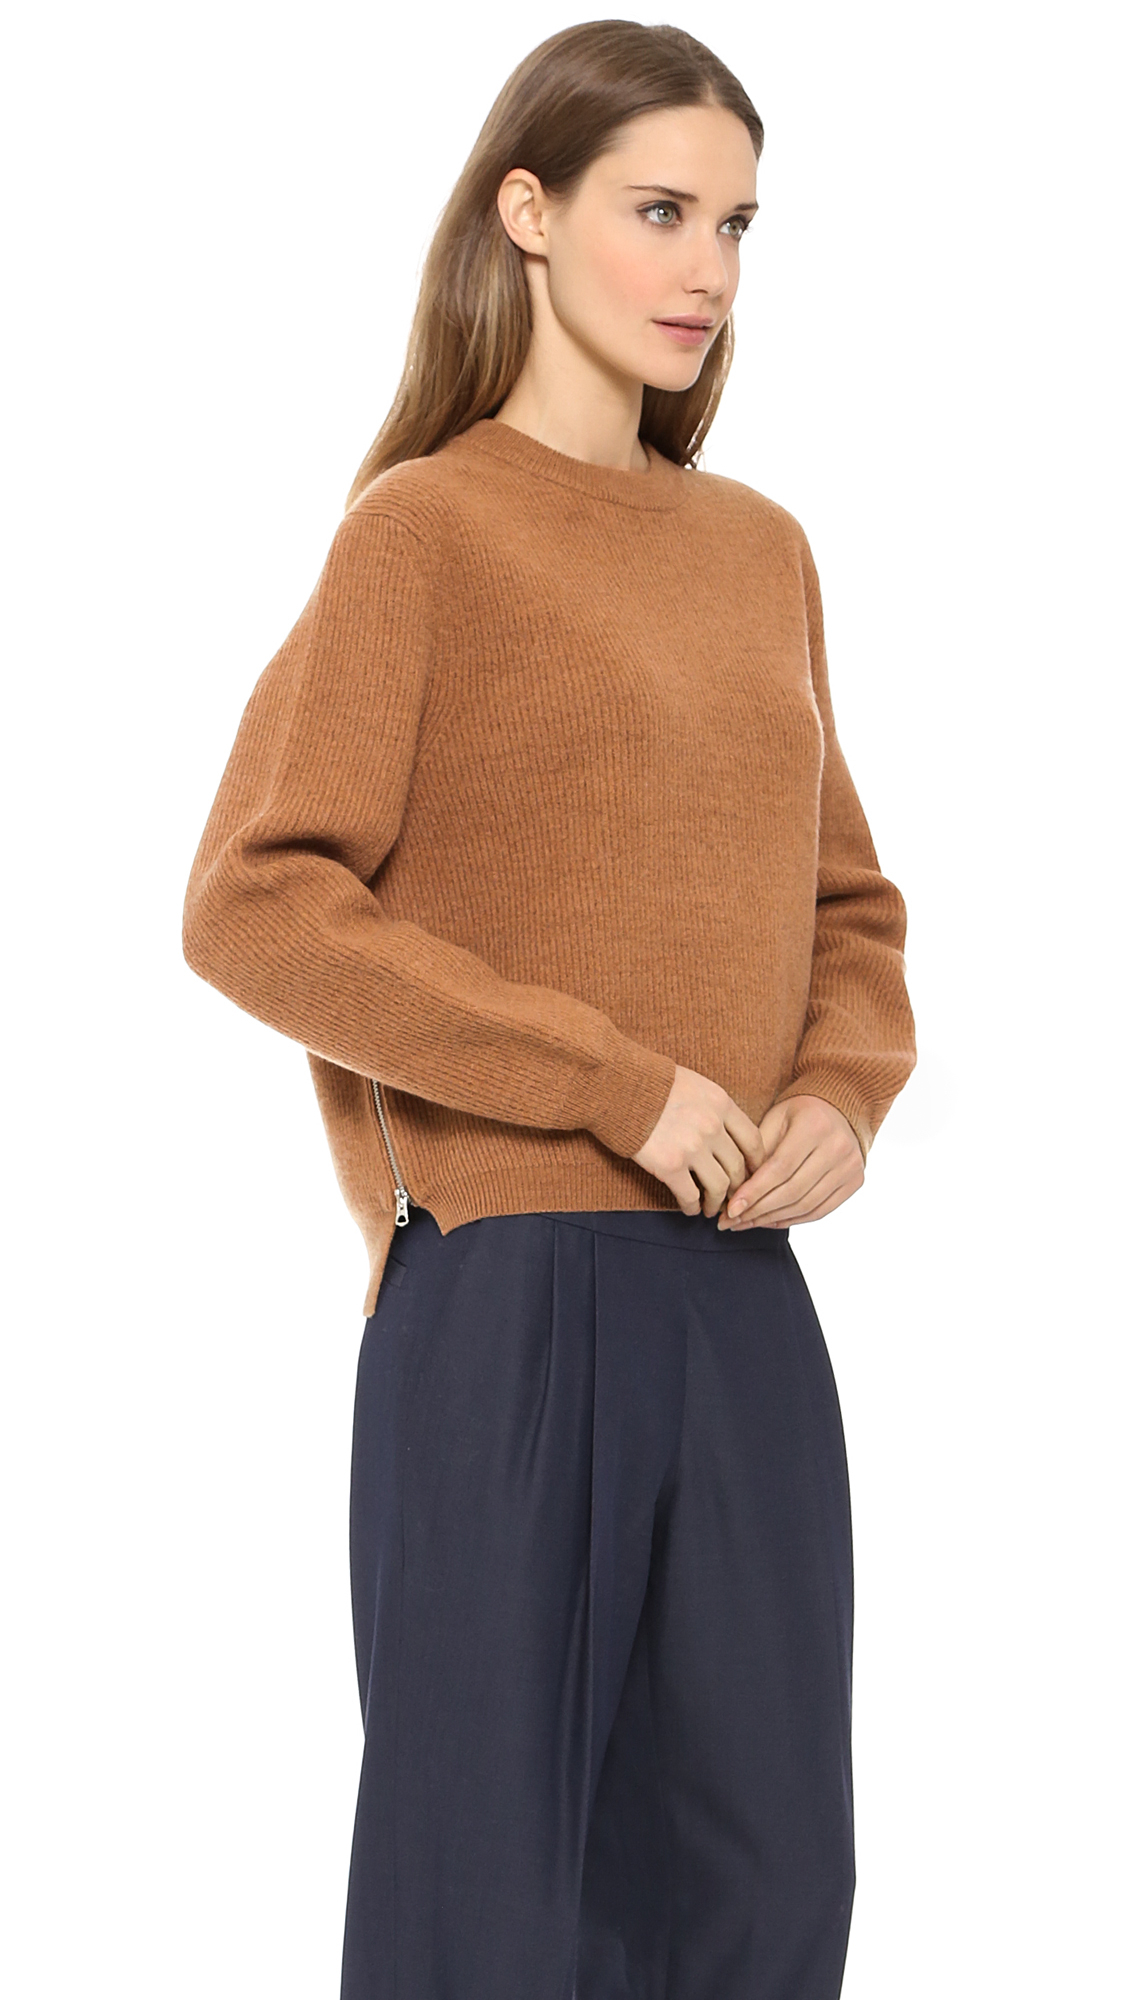 Acne Studios Misty Boiled Wool Zip Sweater - Camel in Brown - Lyst